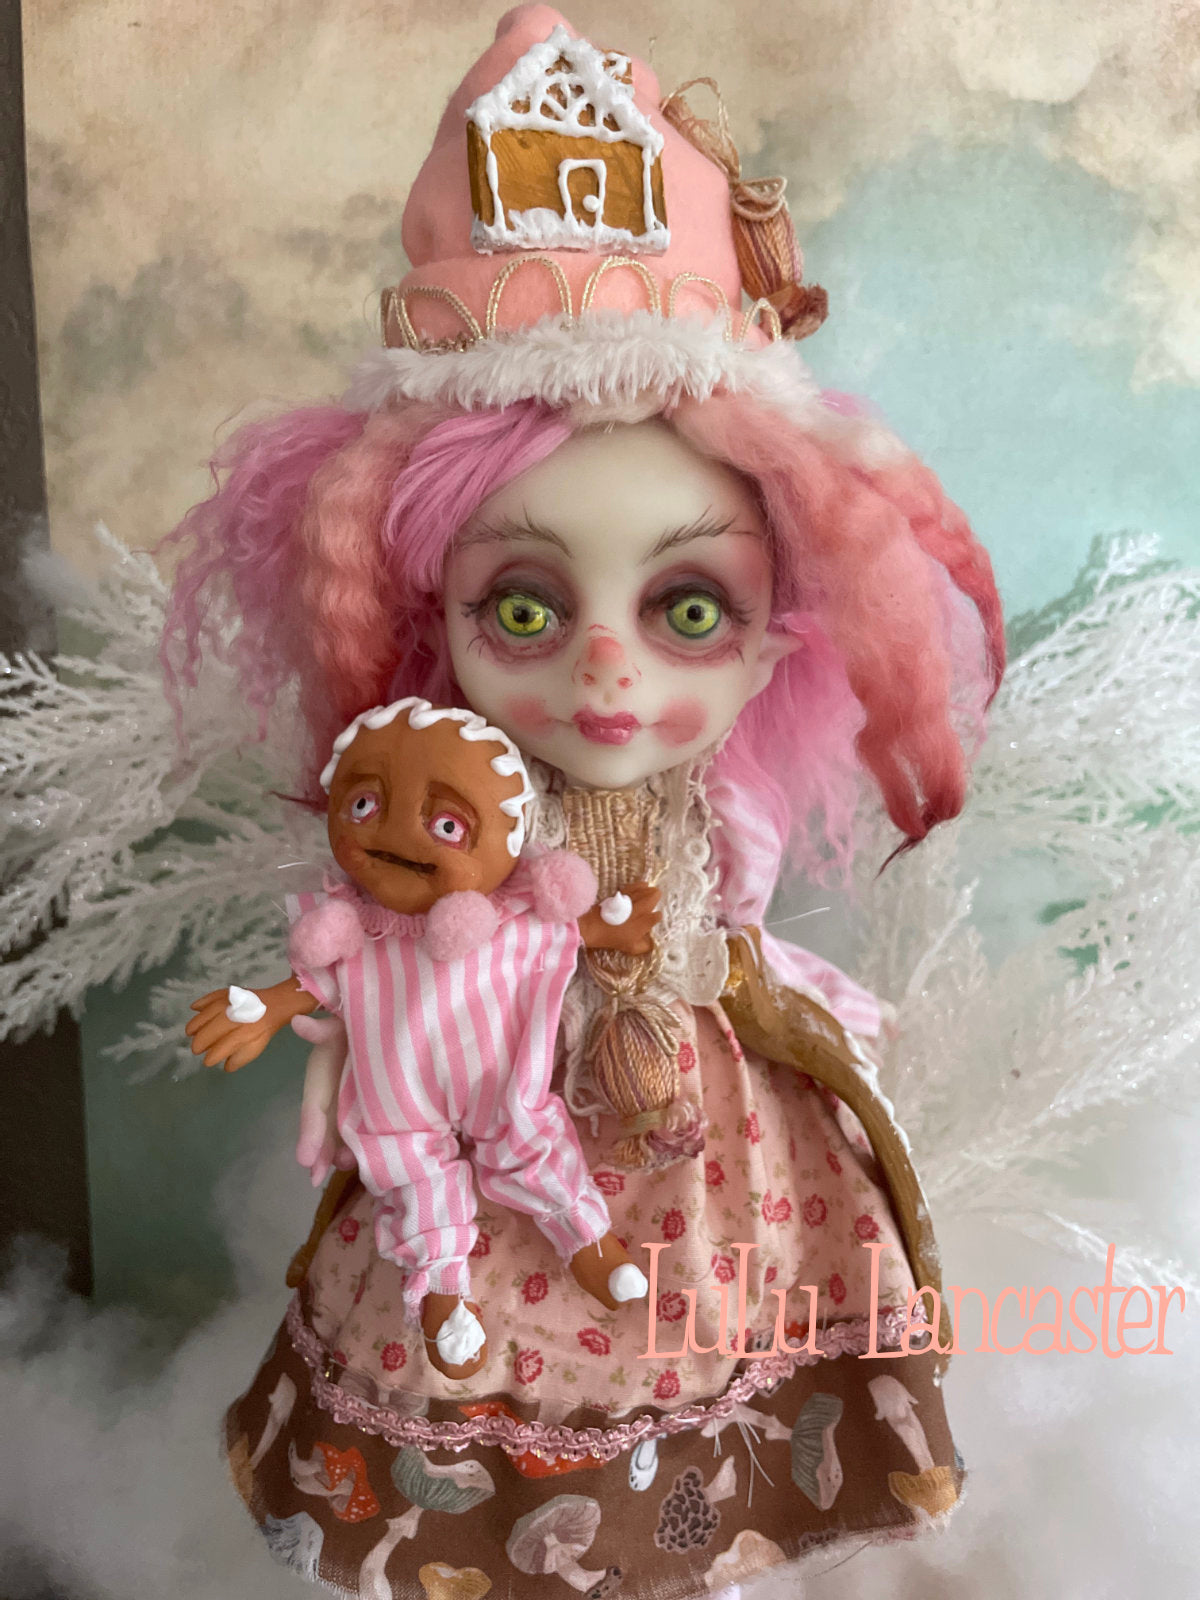 Pinkle Gingerbread Puff the Christmas Elf LuLu's Holiday Original LuLu Lancaster Art Doll